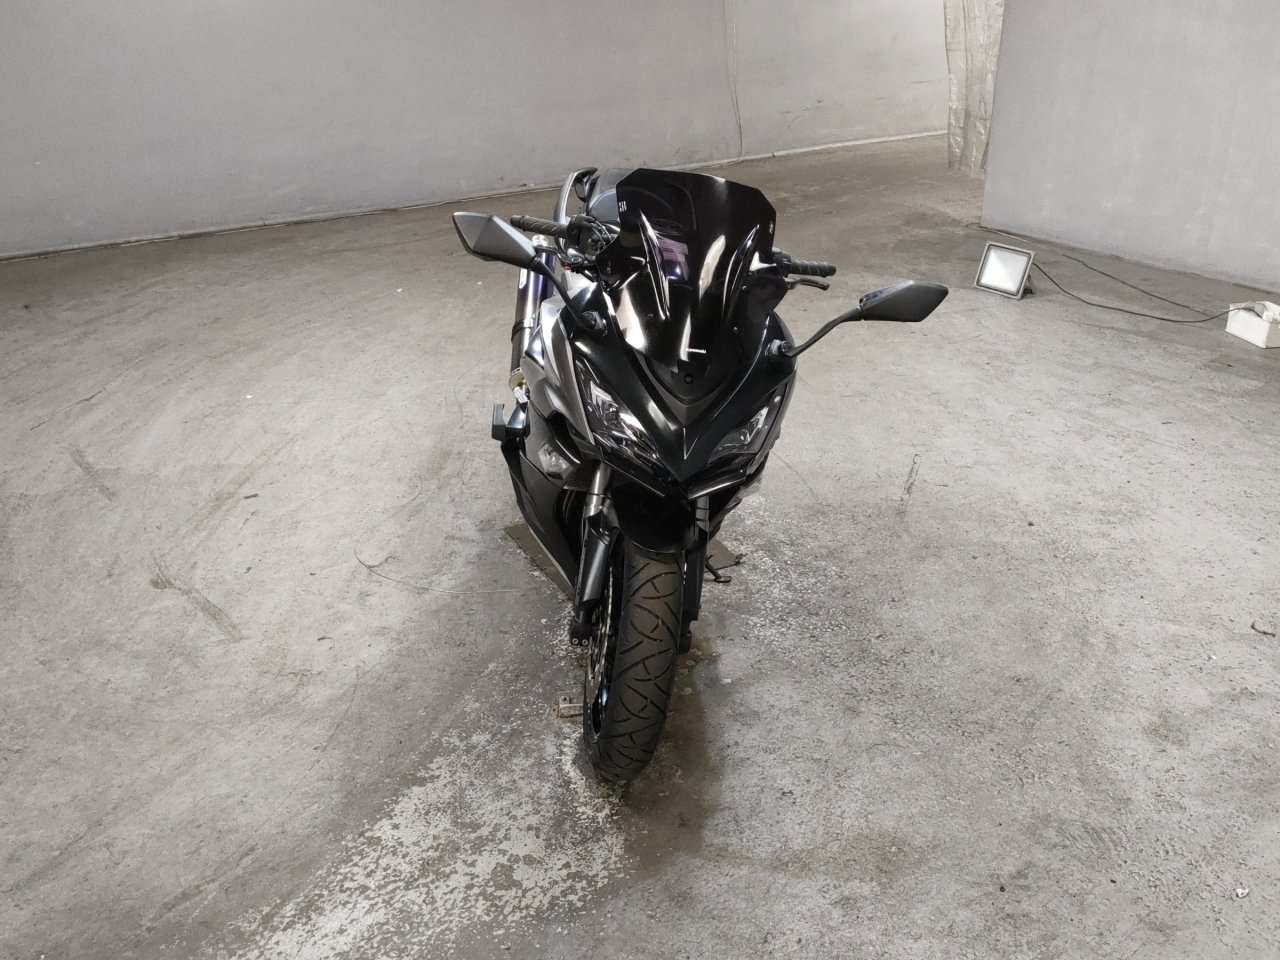 Kawasaki Ninja 1000 - Adamoto - Motorcycles from Japan